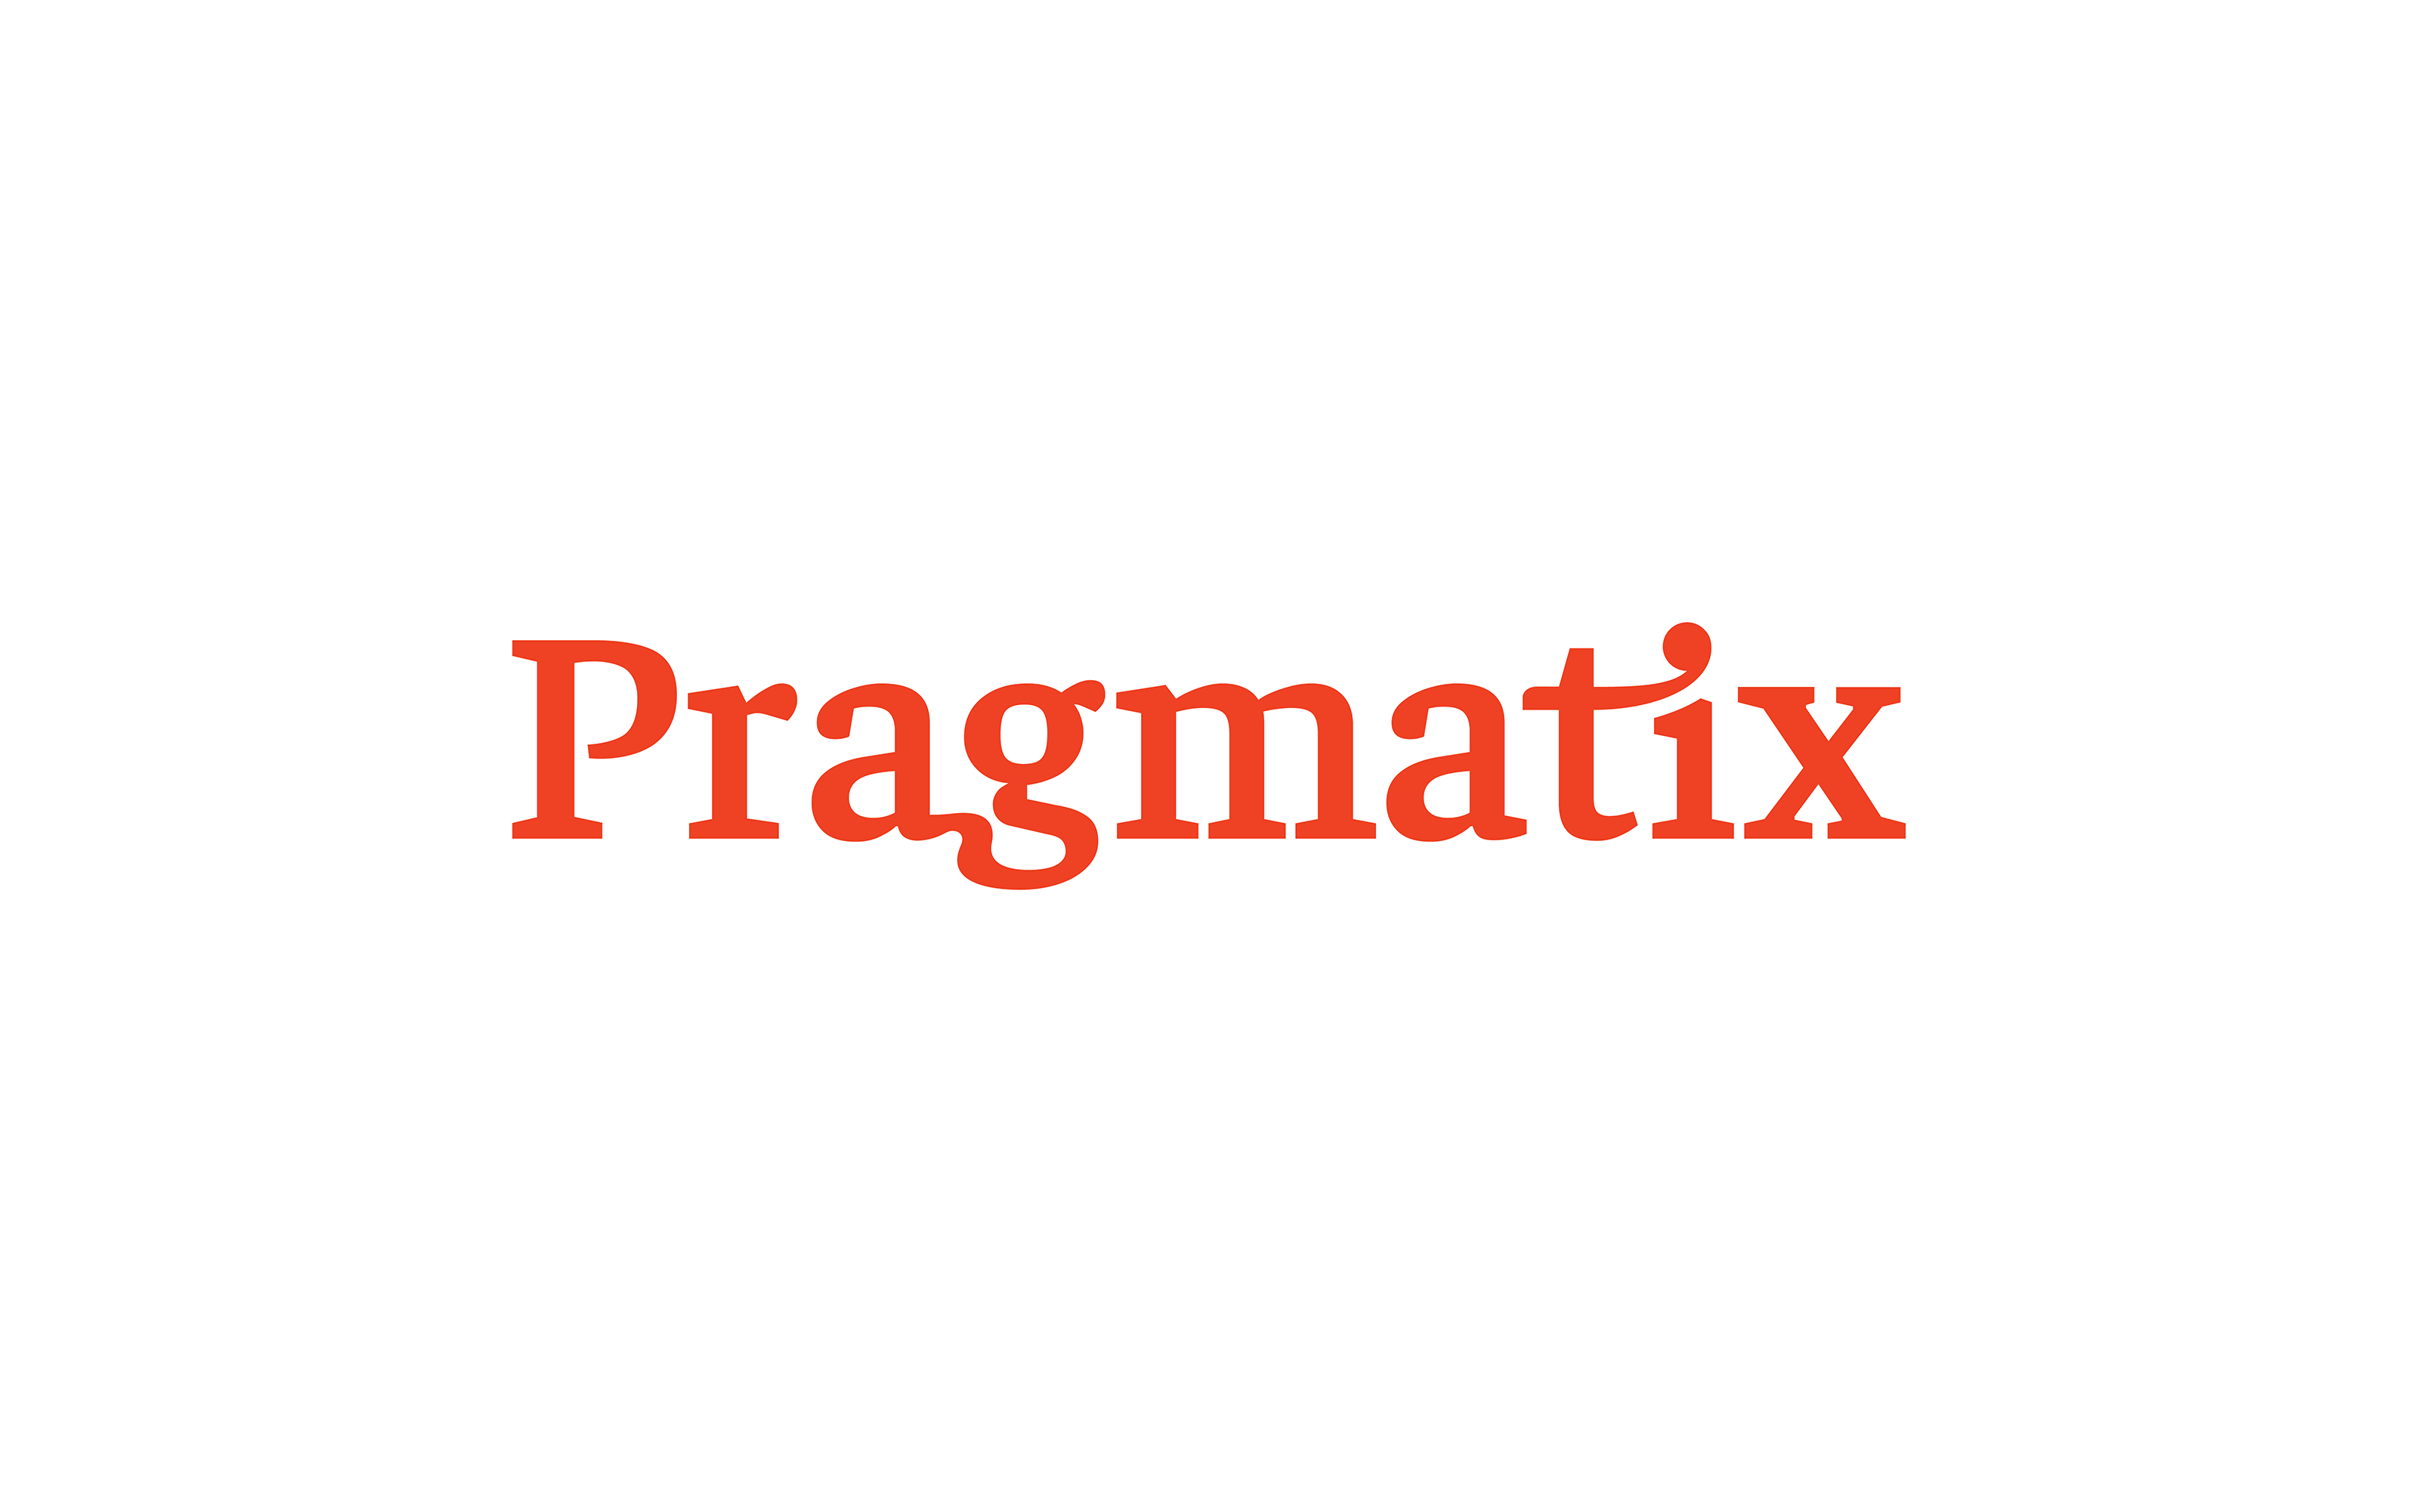 Pragmatix logo designed by re:brand